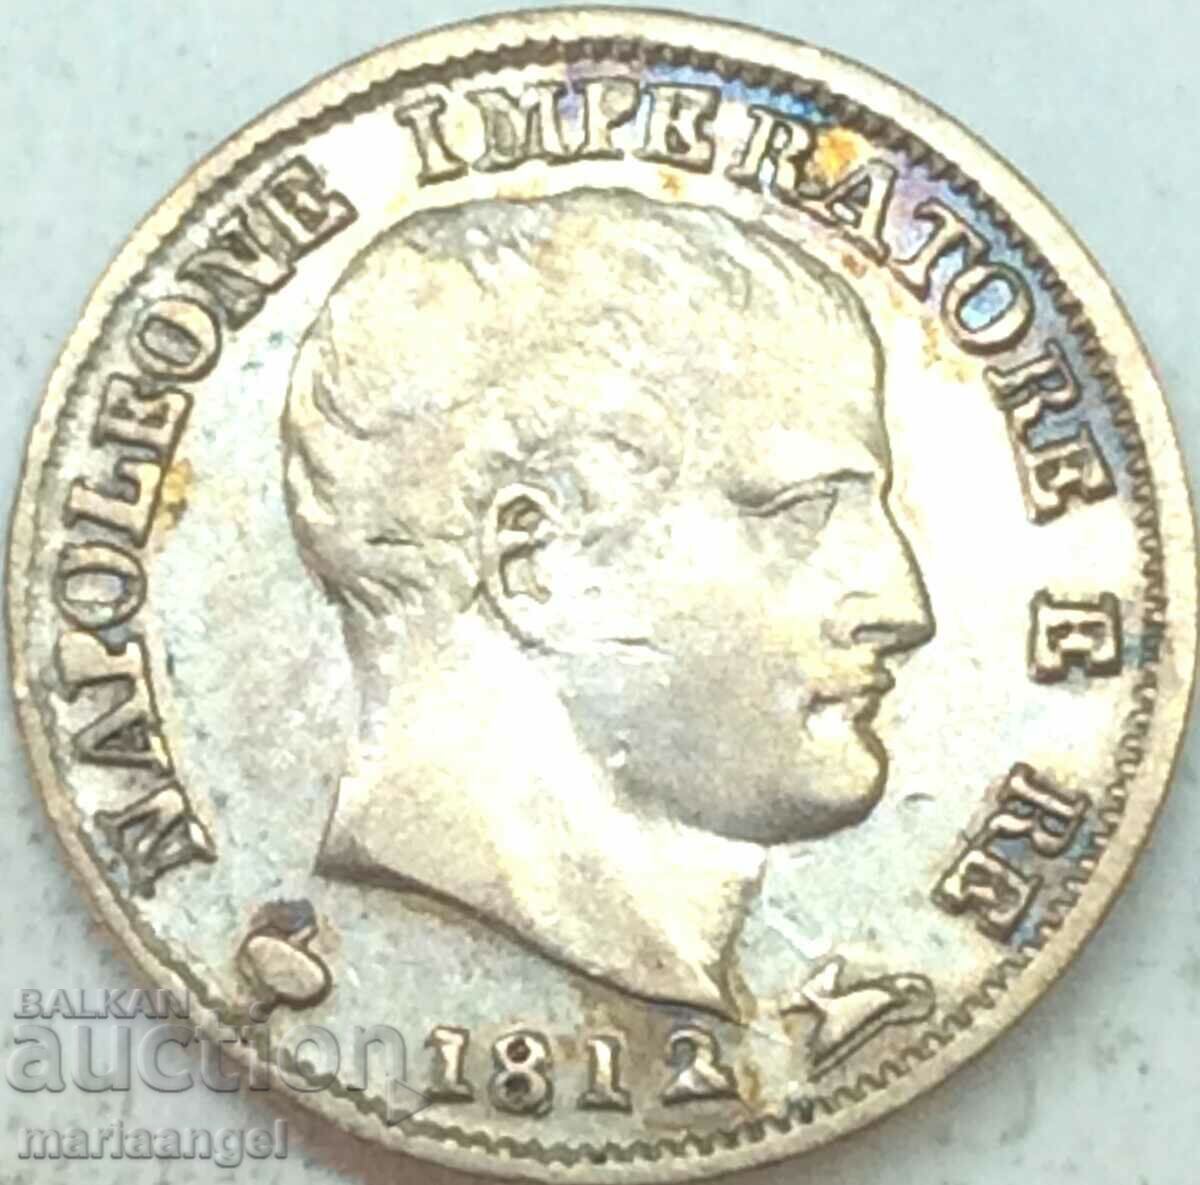 Napoleon 5 Soldi 1812 Ιταλία M - Βασίλειο του Μιλάνου 1804-1814